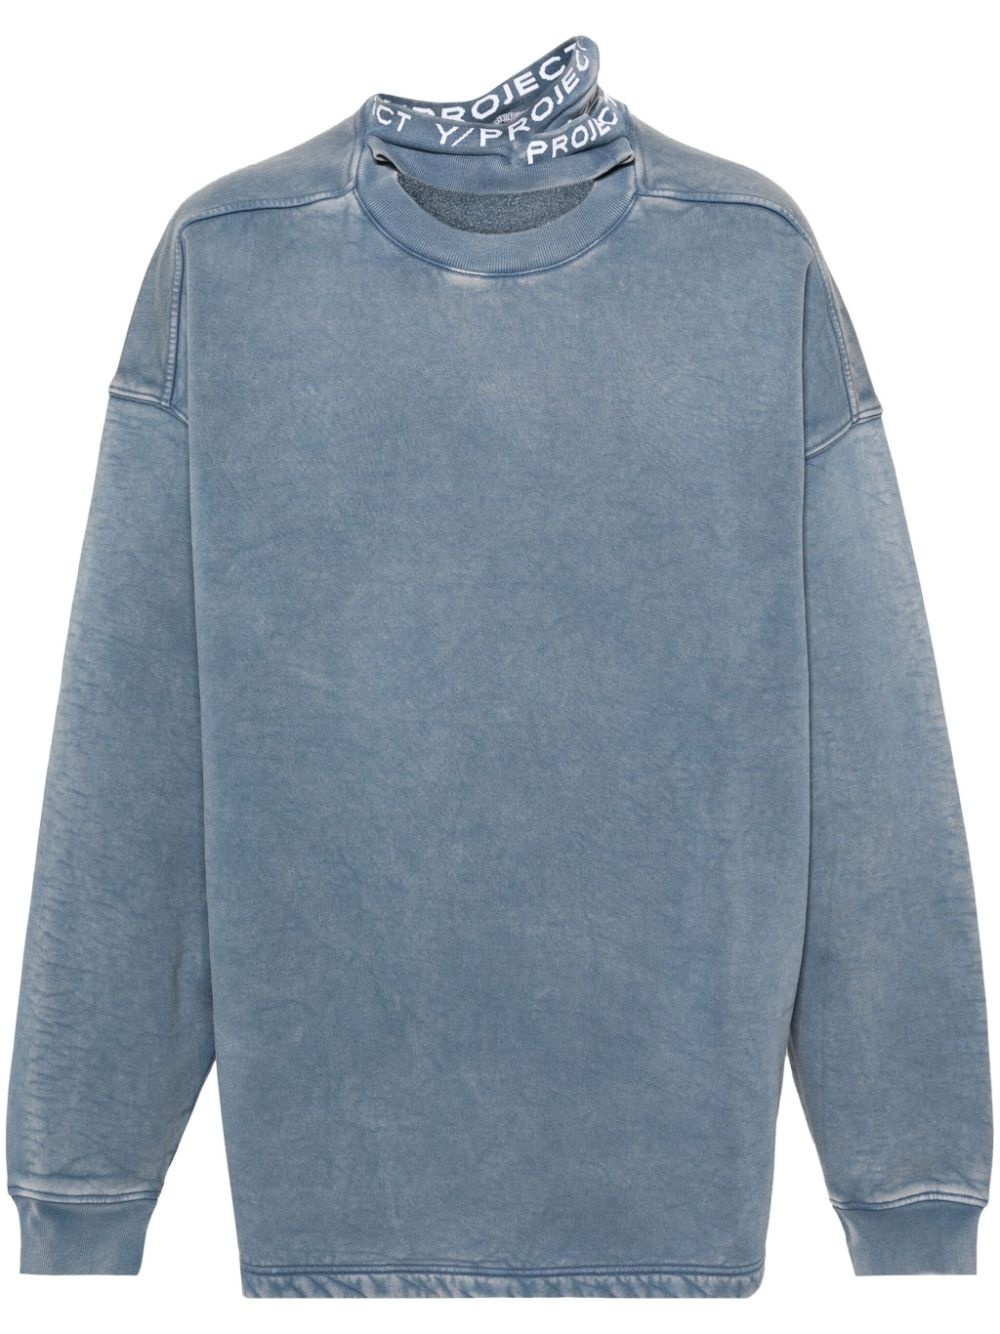 Tripe Collar cotton sweatshirt - 1